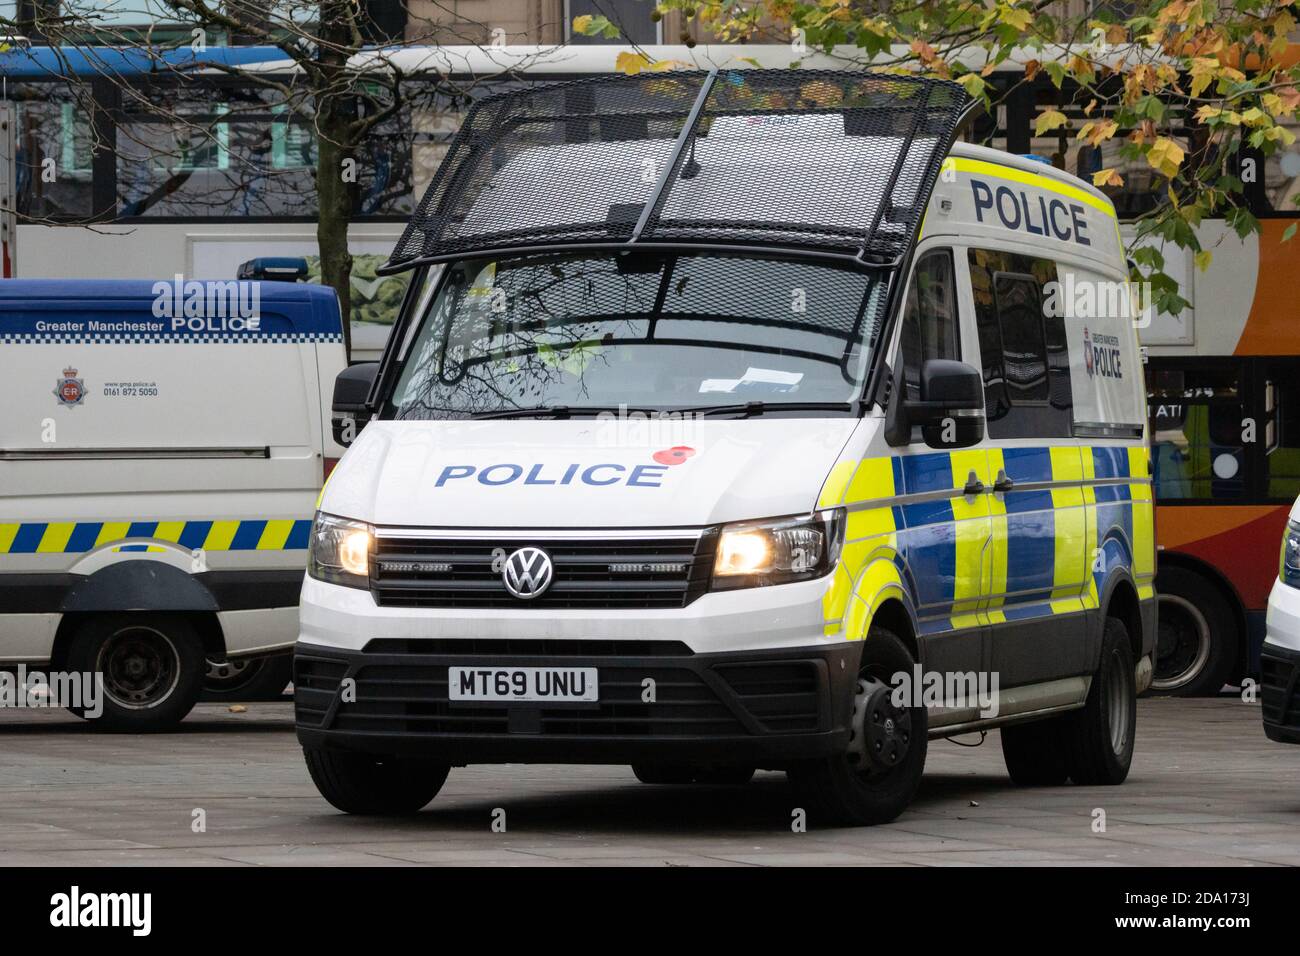 Police VW Riot van, Manchester, 08-11-2020, pendant les marches de protestation anti-verrouillage lockdown2, covid, covid19, coronavirus Banque D'Images